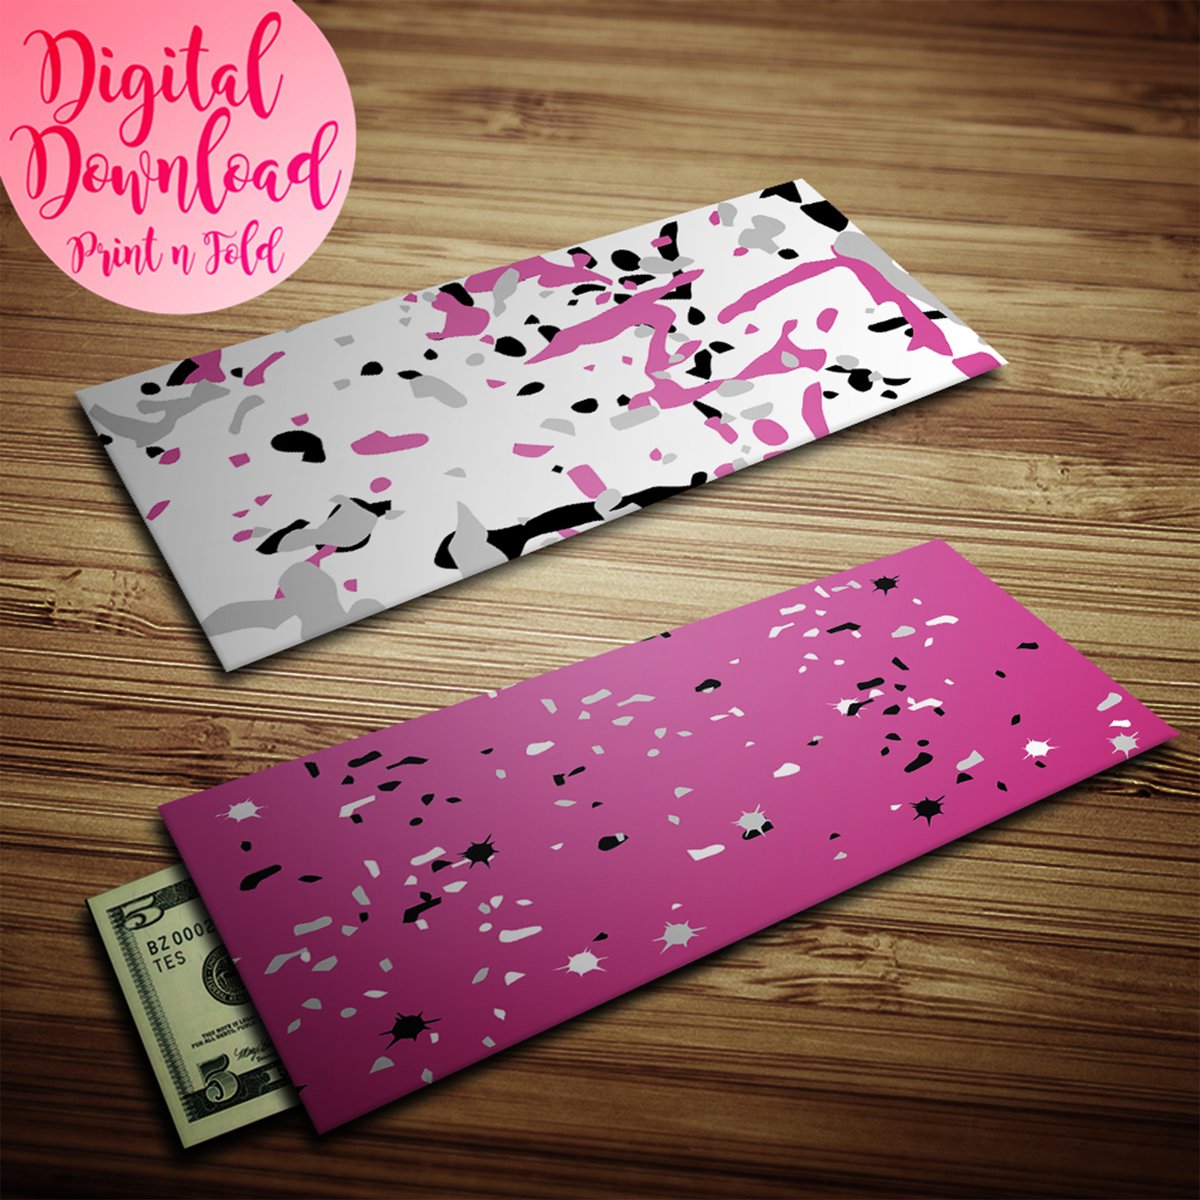 Splattering pink

etsy.me/3PAtjbr 

#giftenvelopes #gifting #DIY #moneyenvelopes #cashenvelopes #lastminutegift #moneysorting #moneysaving #envelopestuffing